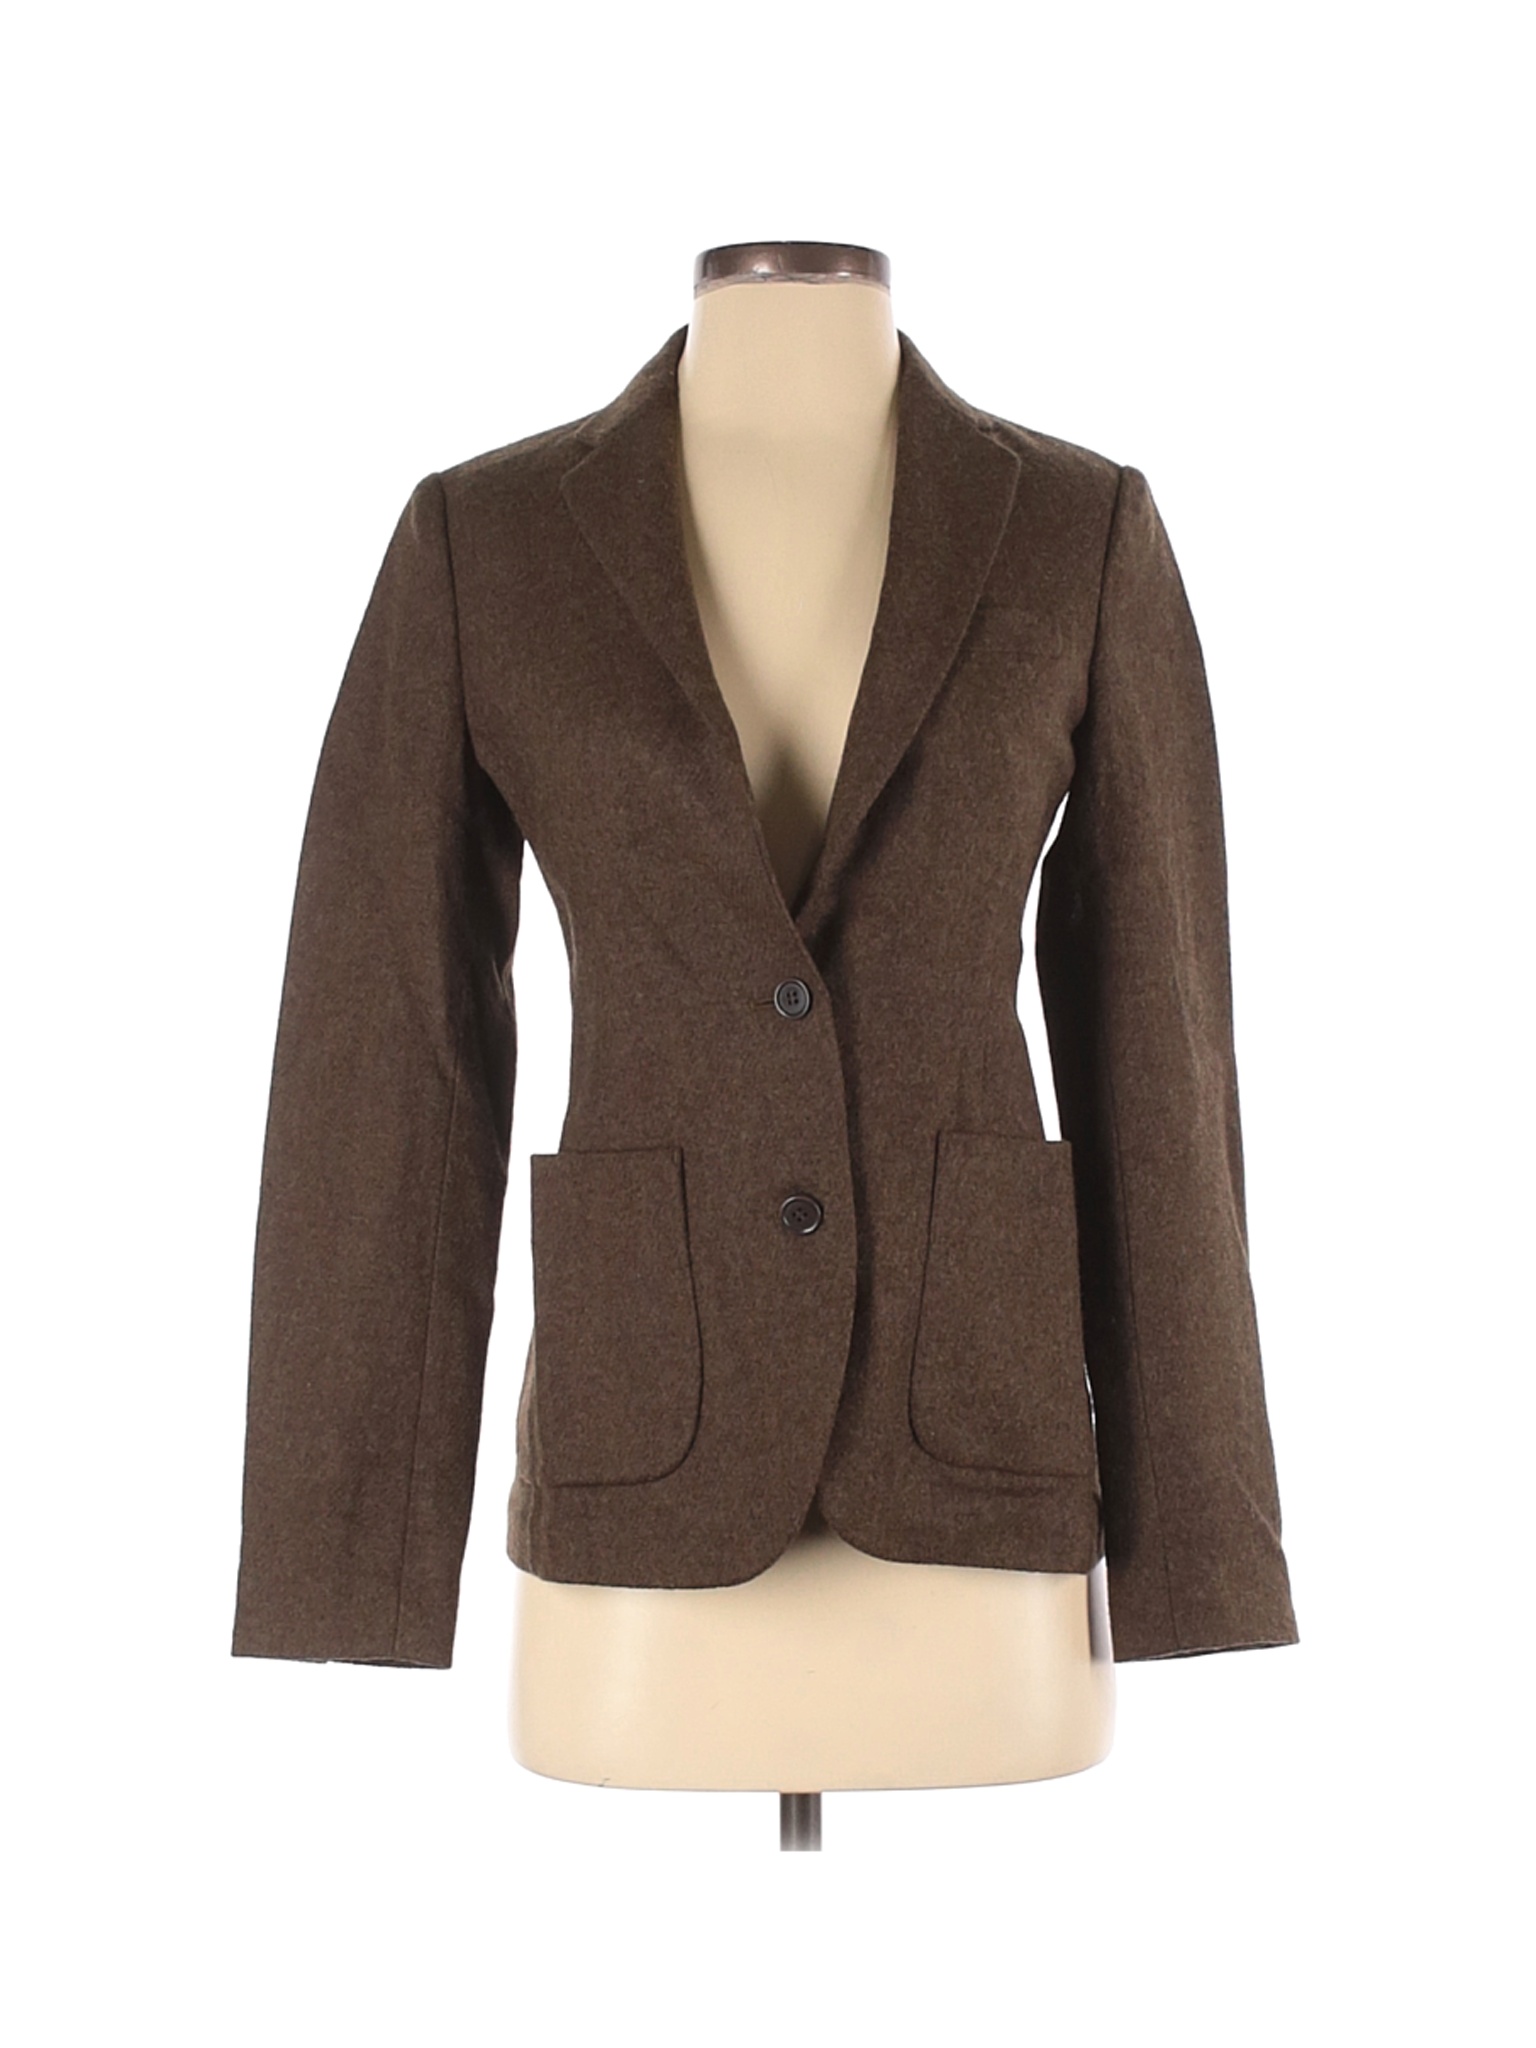 Uniqlo Women Brown Wool Blazer S | eBay